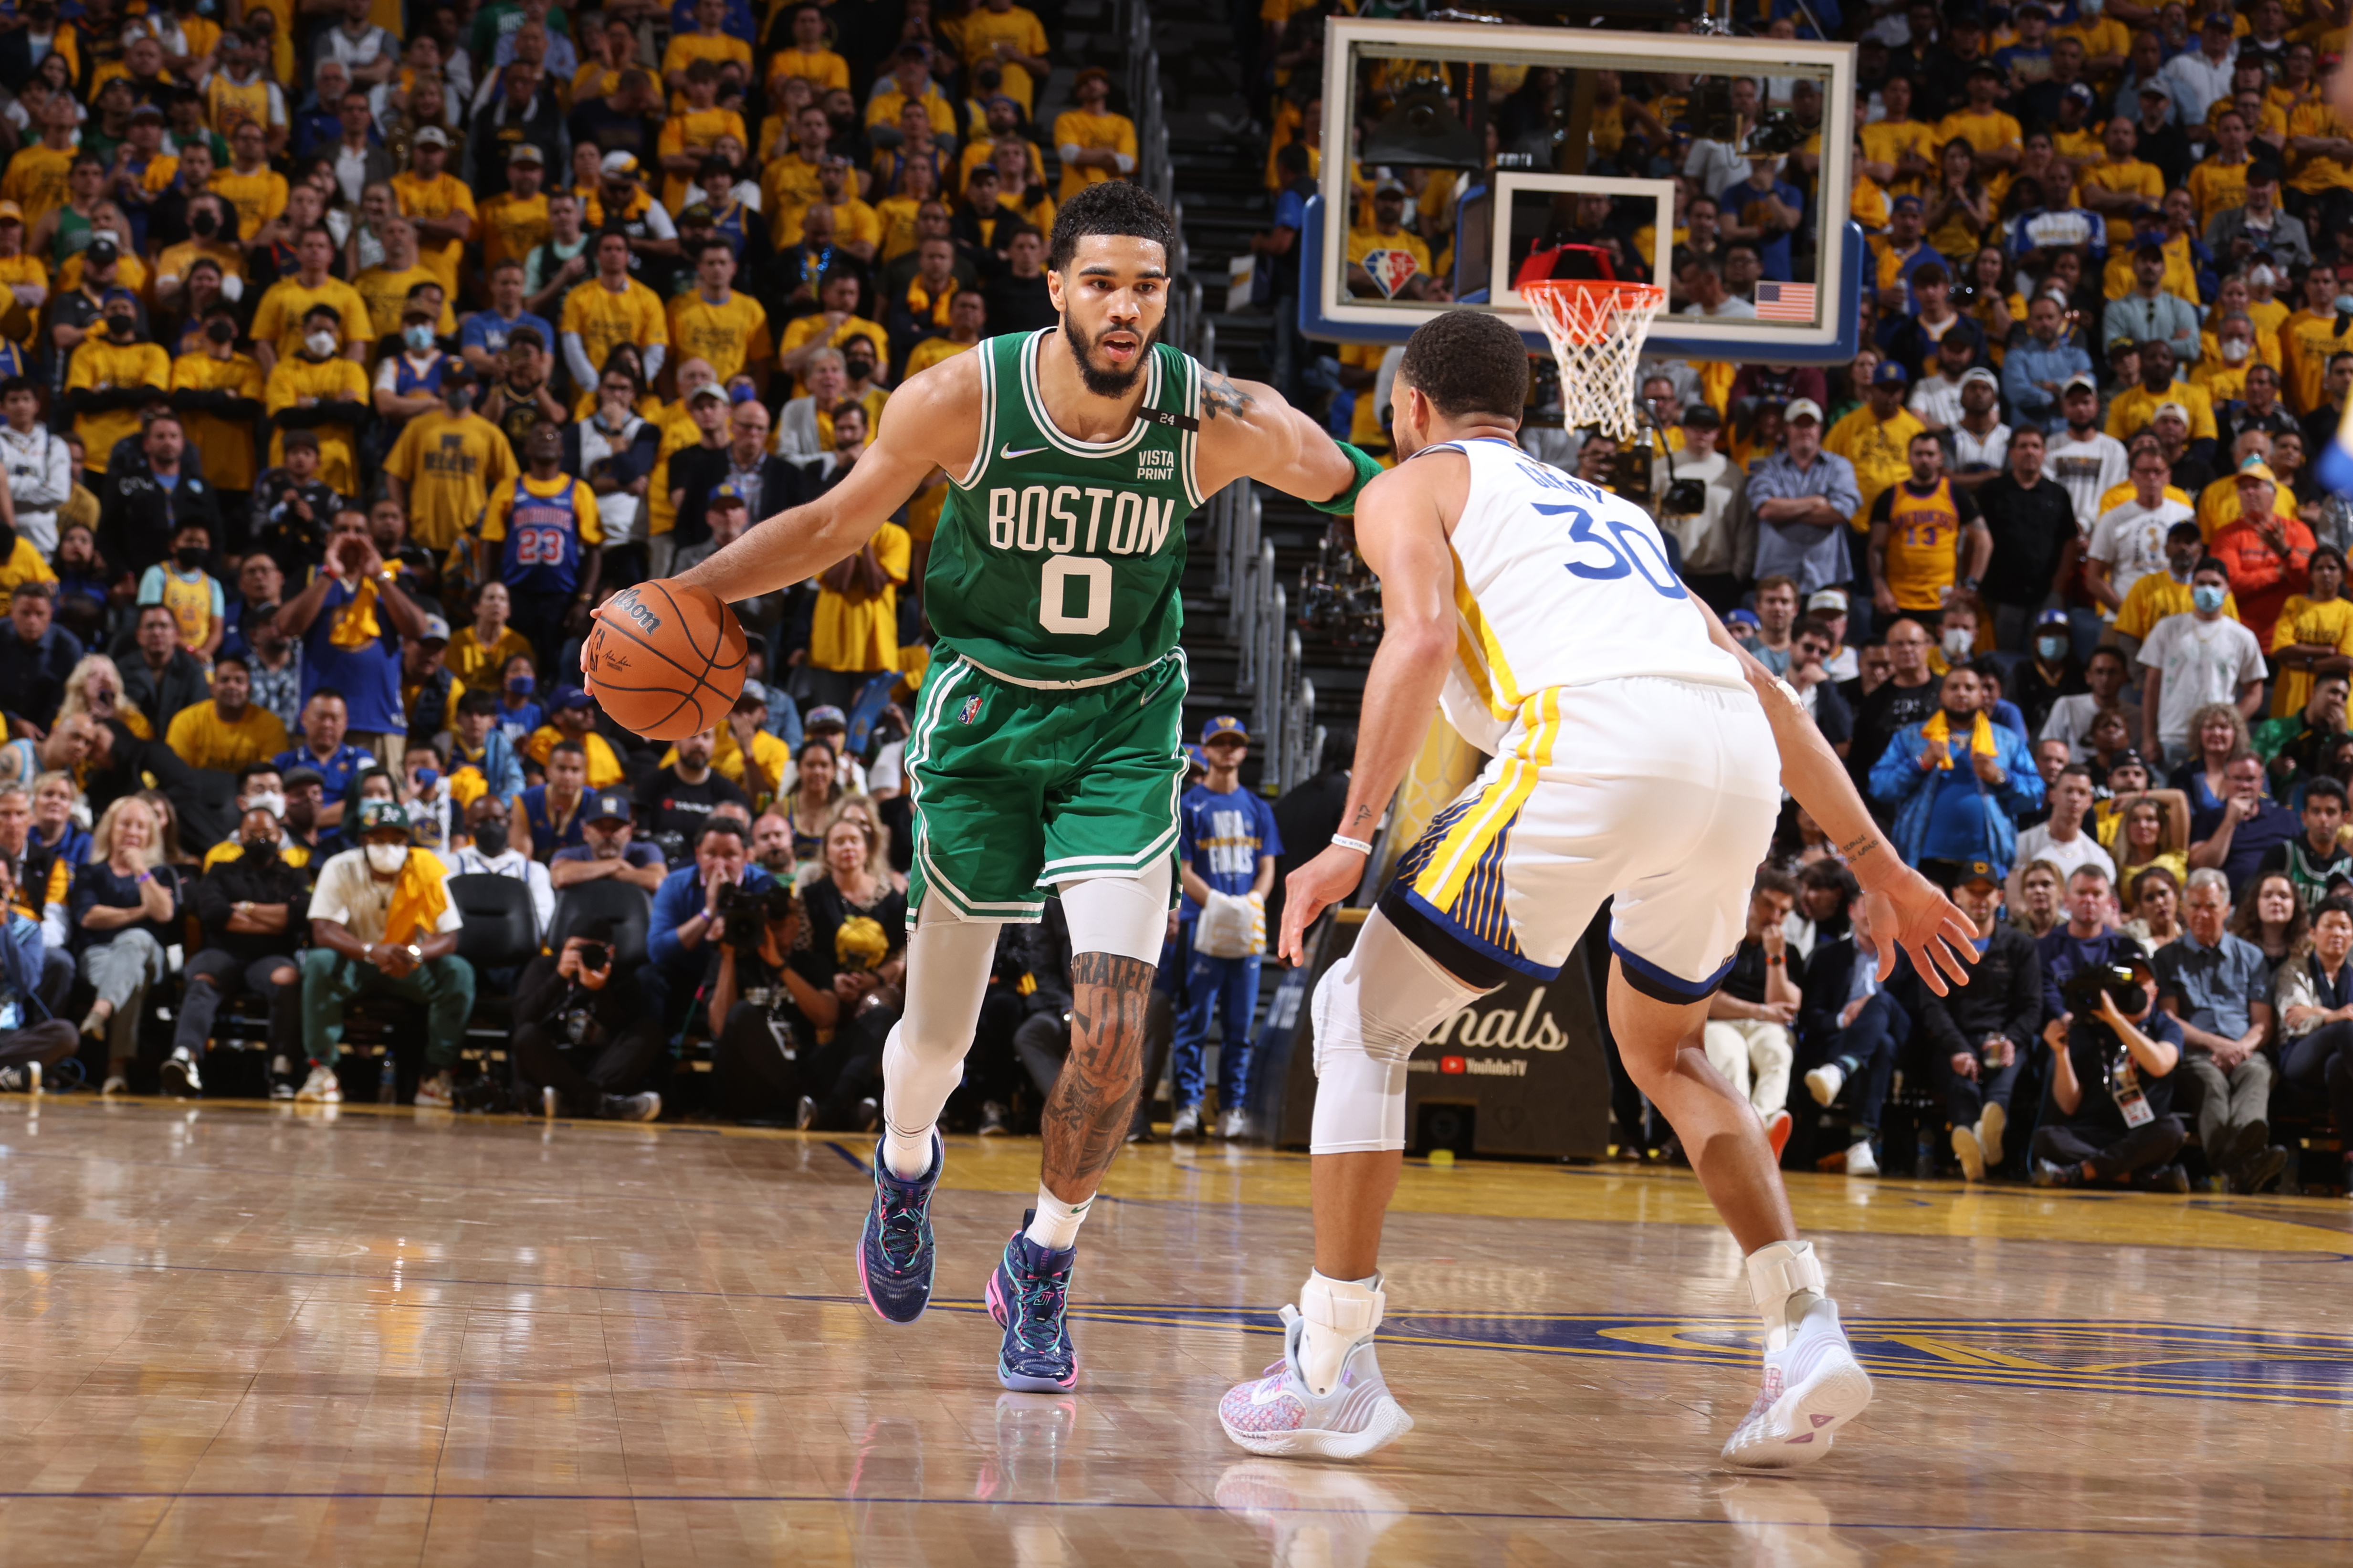 SportsCenter on X: Warriors vs. Celtics The 2022 NBA Finals is